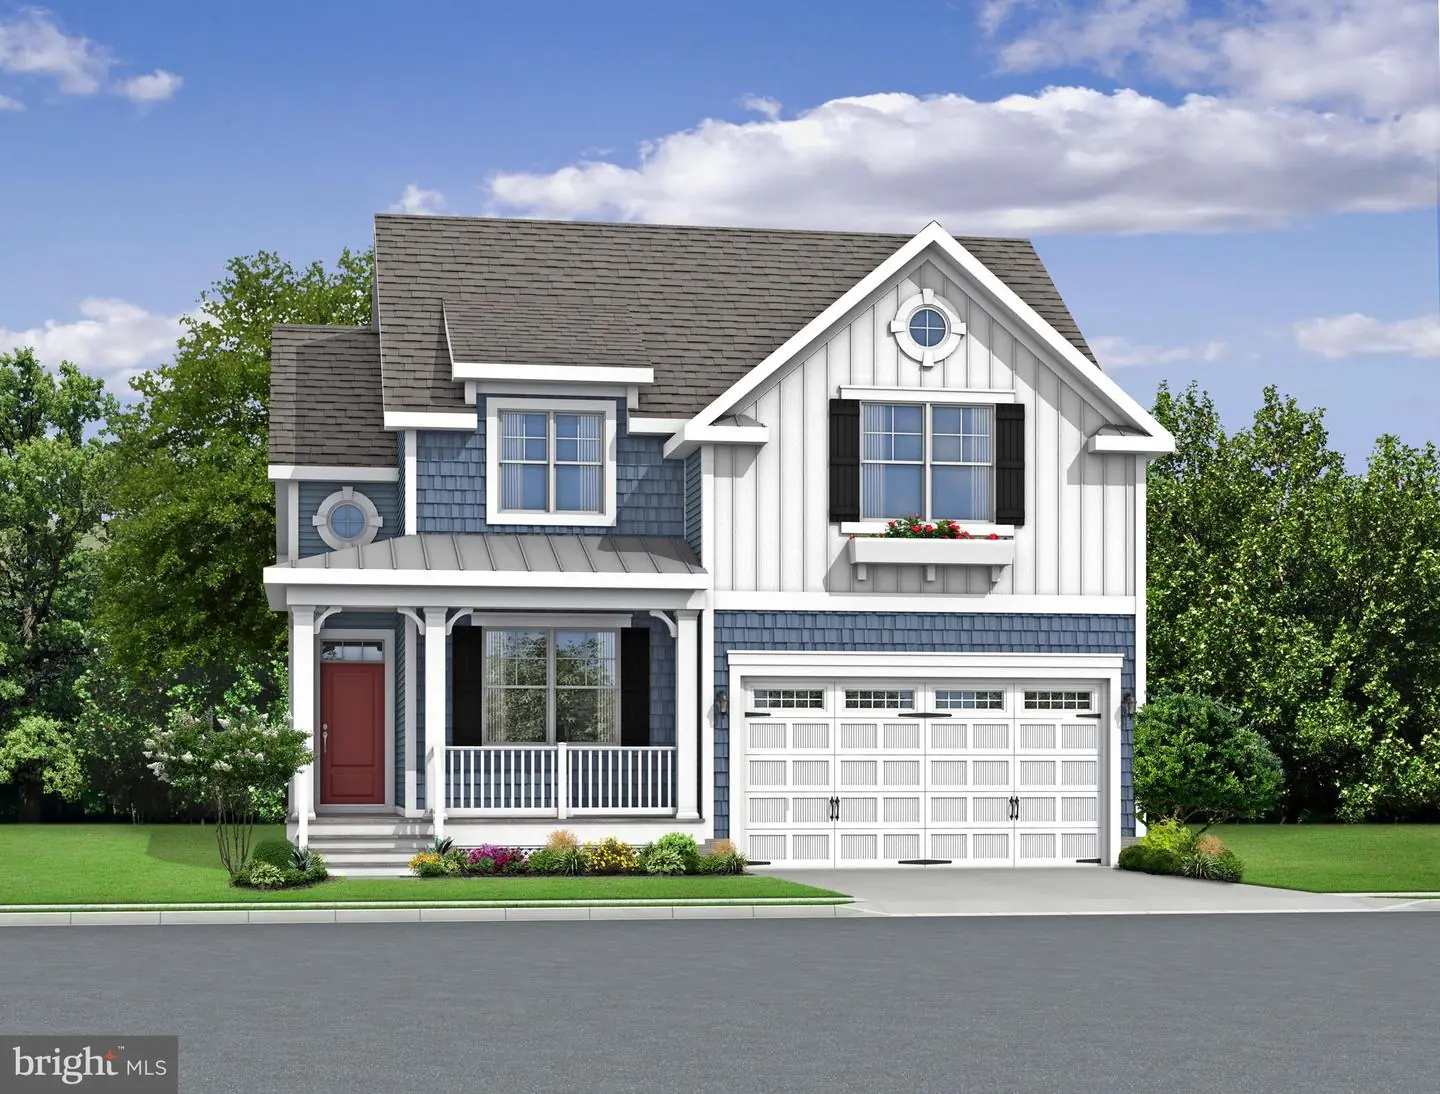 DESU2031440-801988062176-2022-11-02-11-01-30 Iris To-be-built Home Tbd | Millsboro, DE Real Estate For Sale | MLS# Desu2031440  - David T. King Realtor